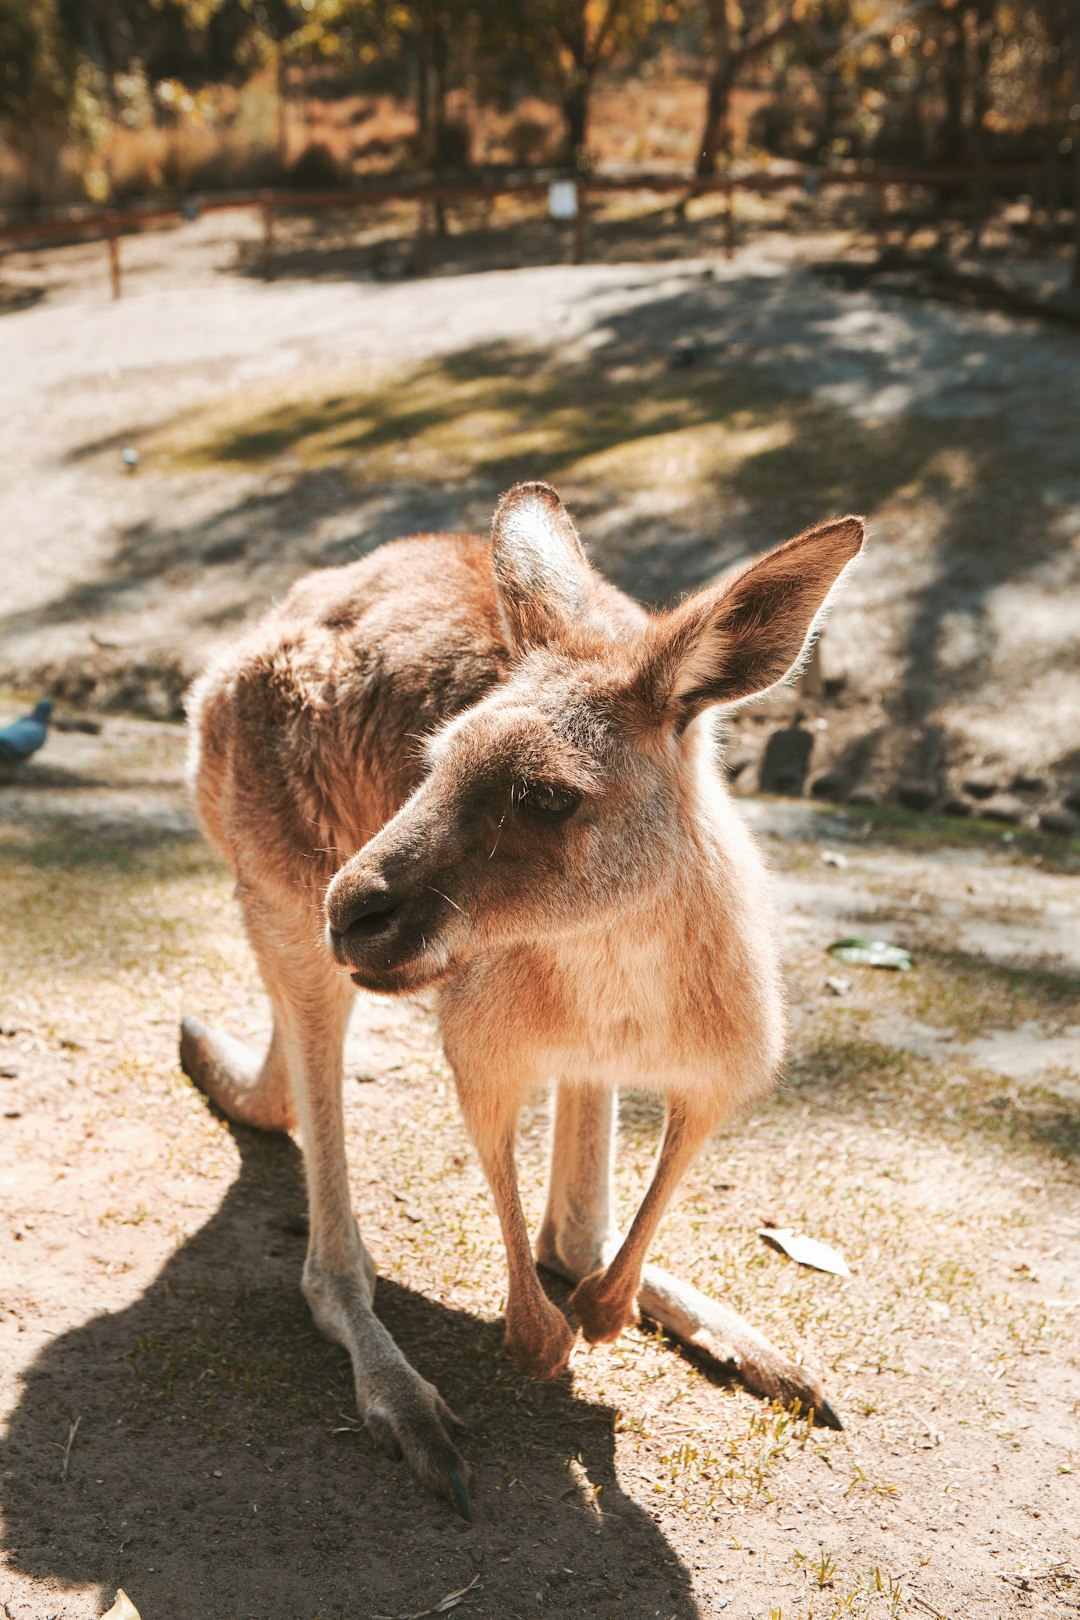  brown kangaroo on gray sand during daytime kangaroo